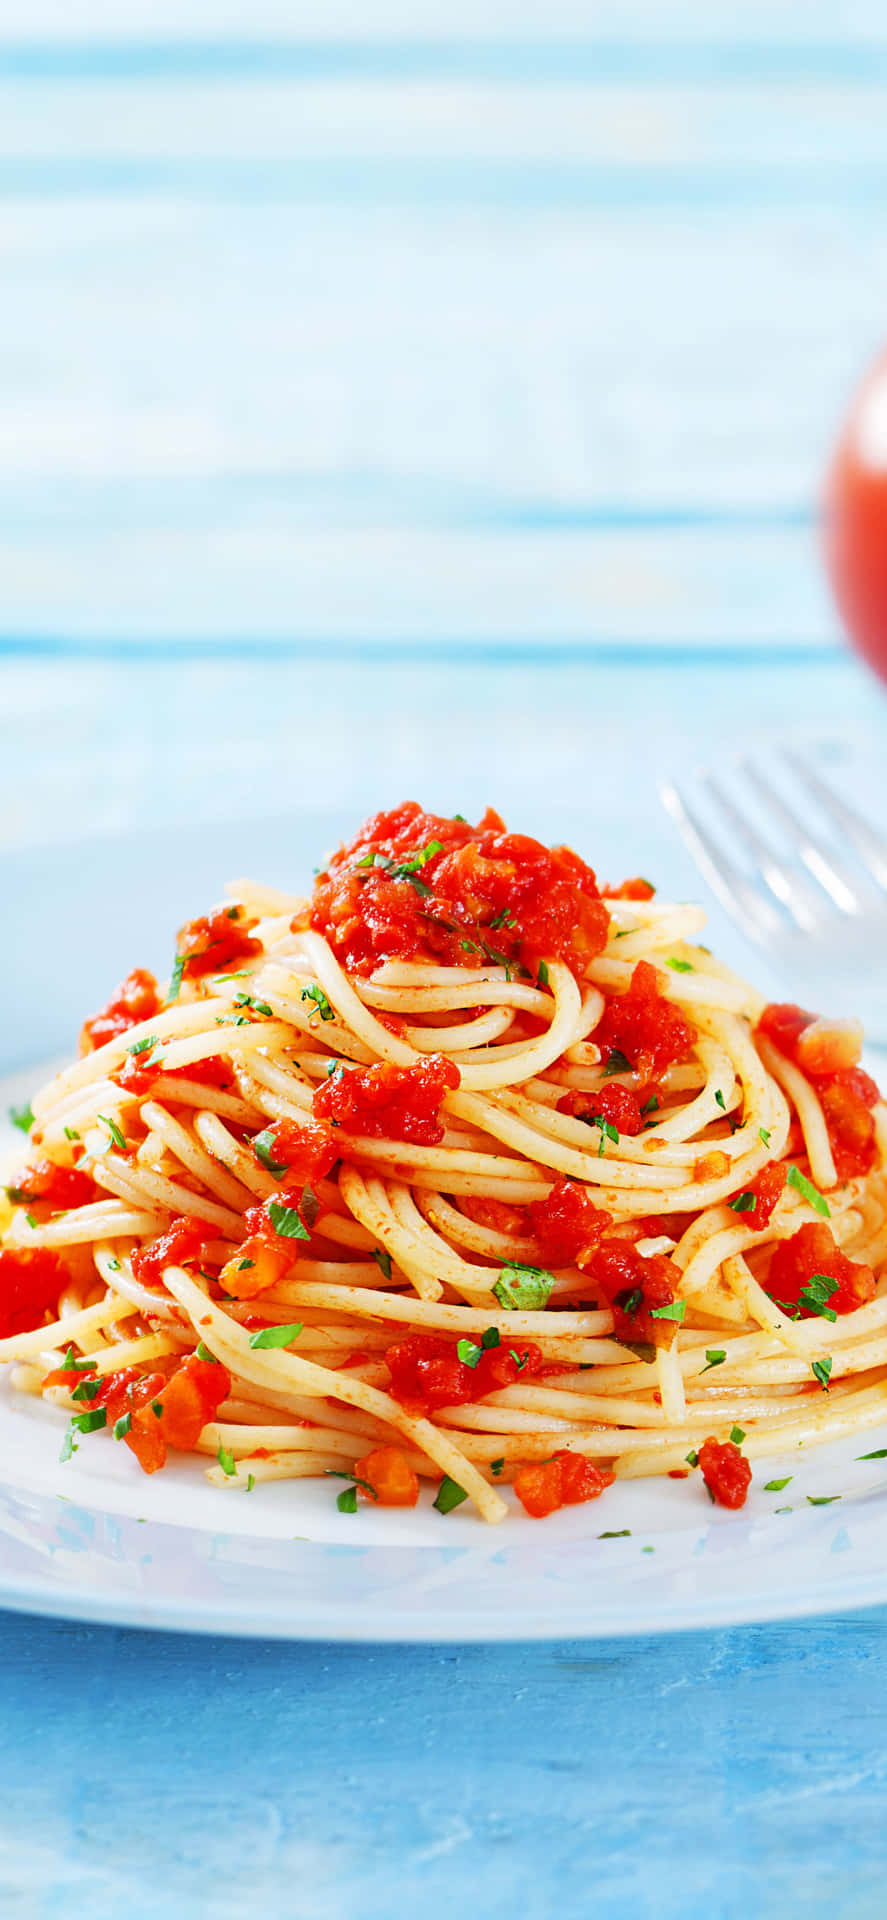 Beautiful Spaghetti And Meatballs Wallpaper